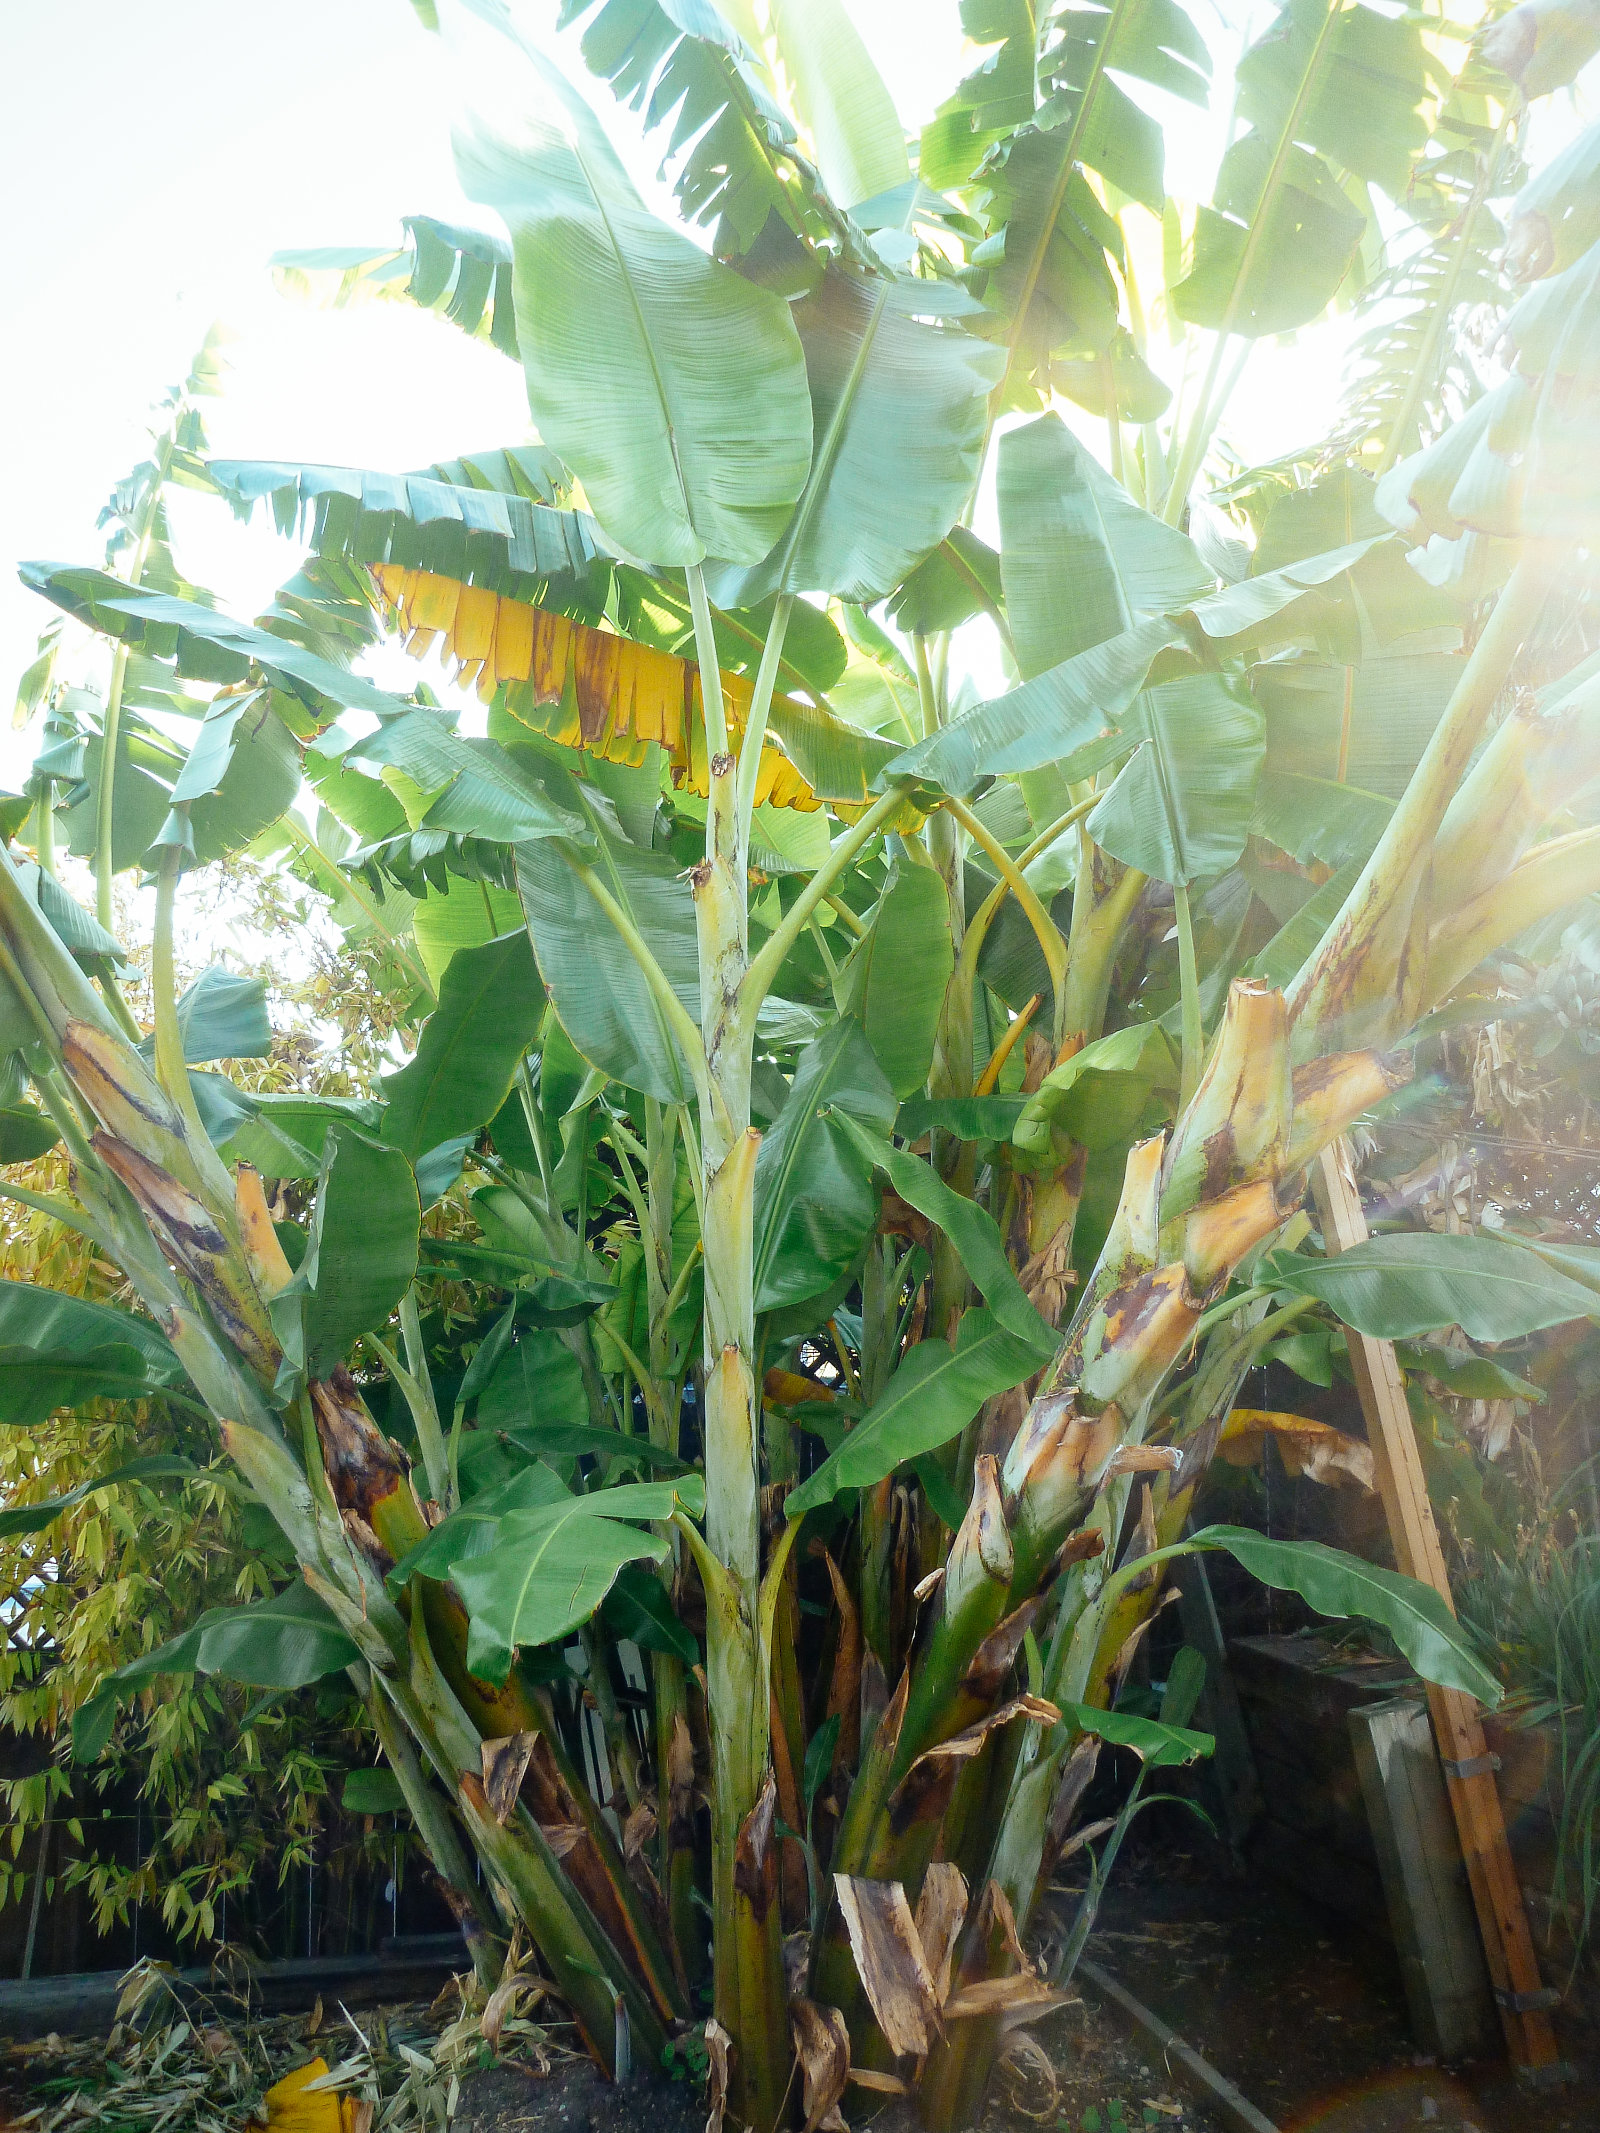 Banana pseudostems look like tall trees, but bananas are actually herbs